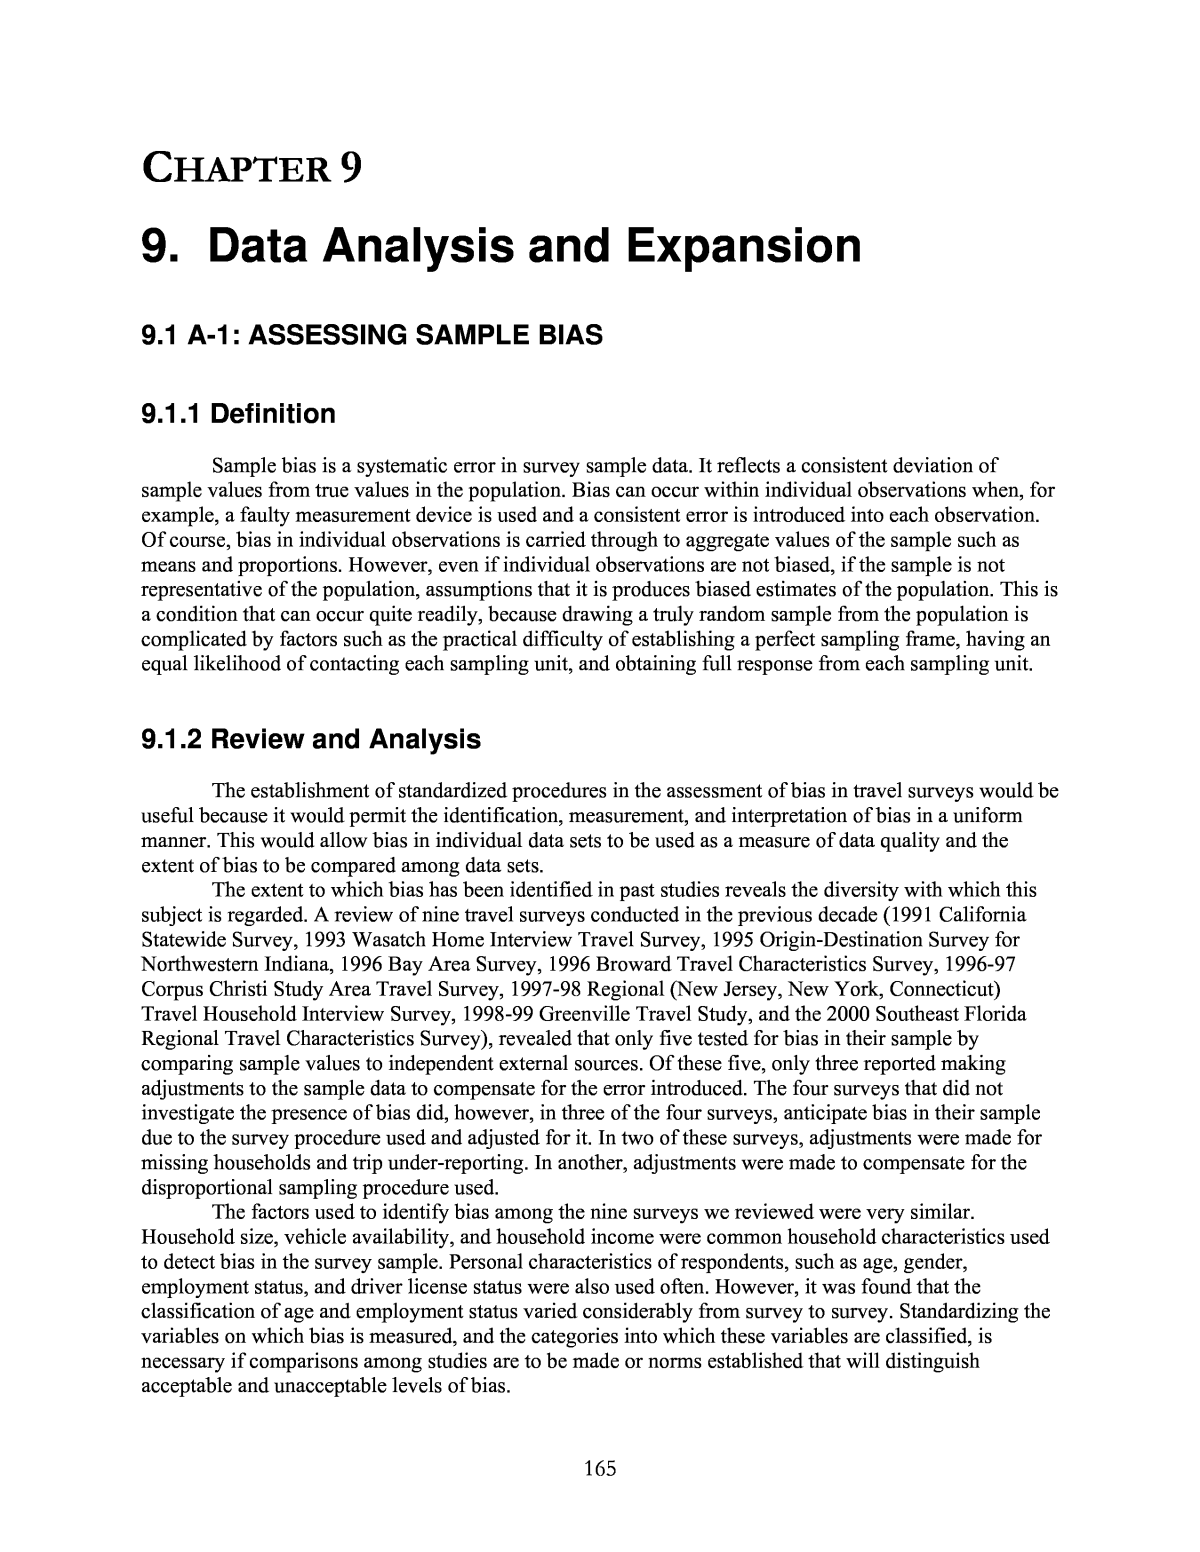 data analysis example